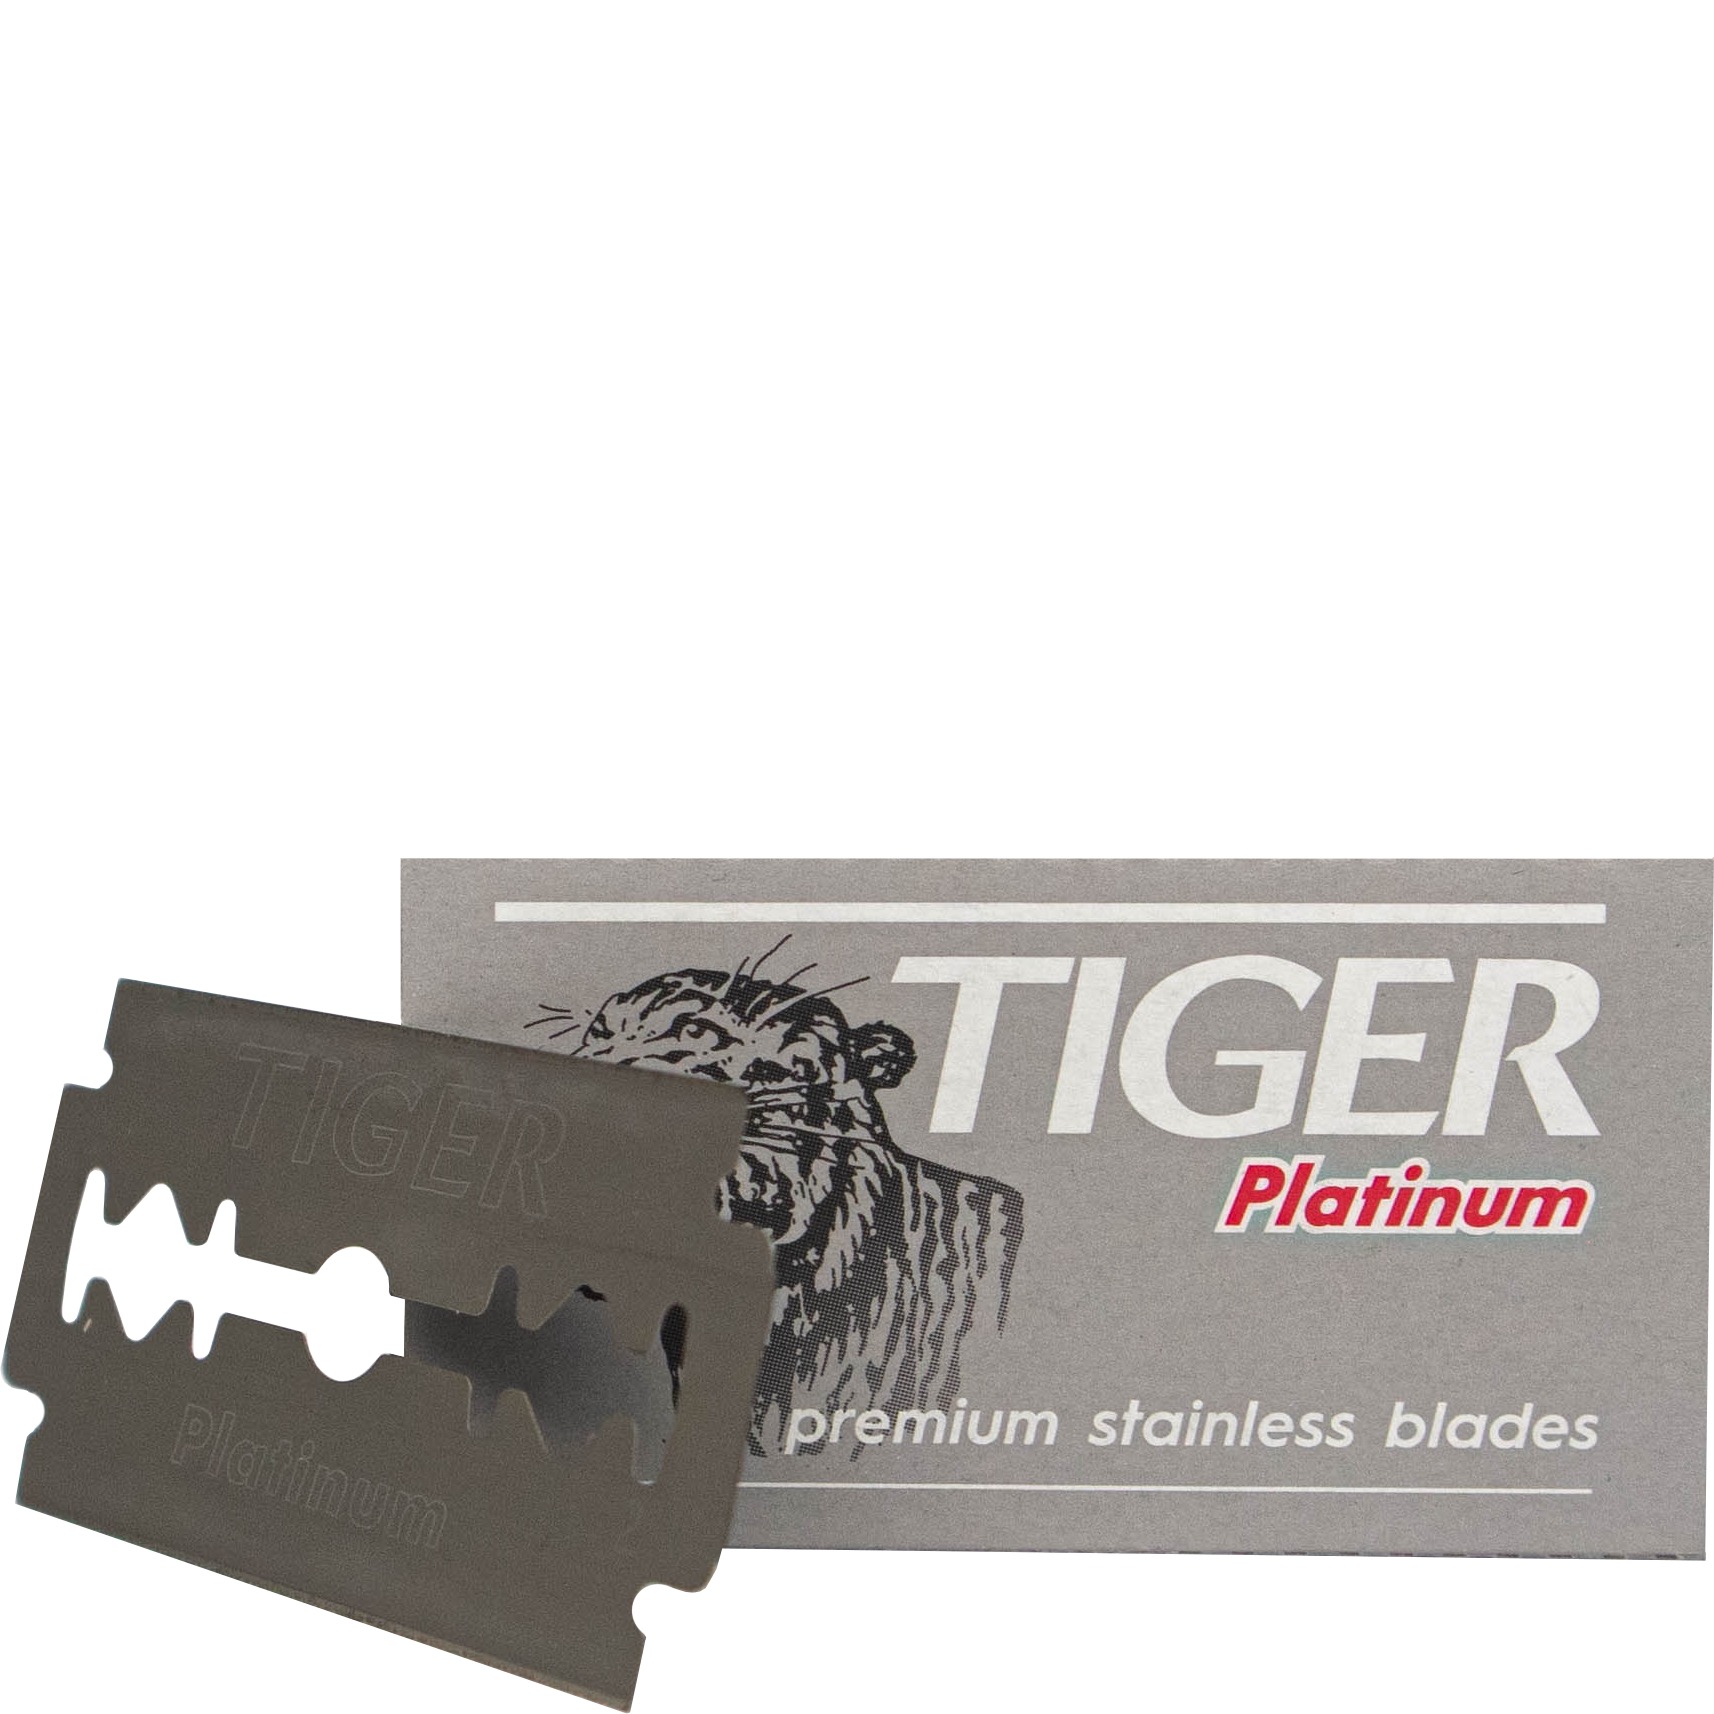 Tiger Platinum Double Edge Blades - 1.3 - DEB-TIGER-PLAT